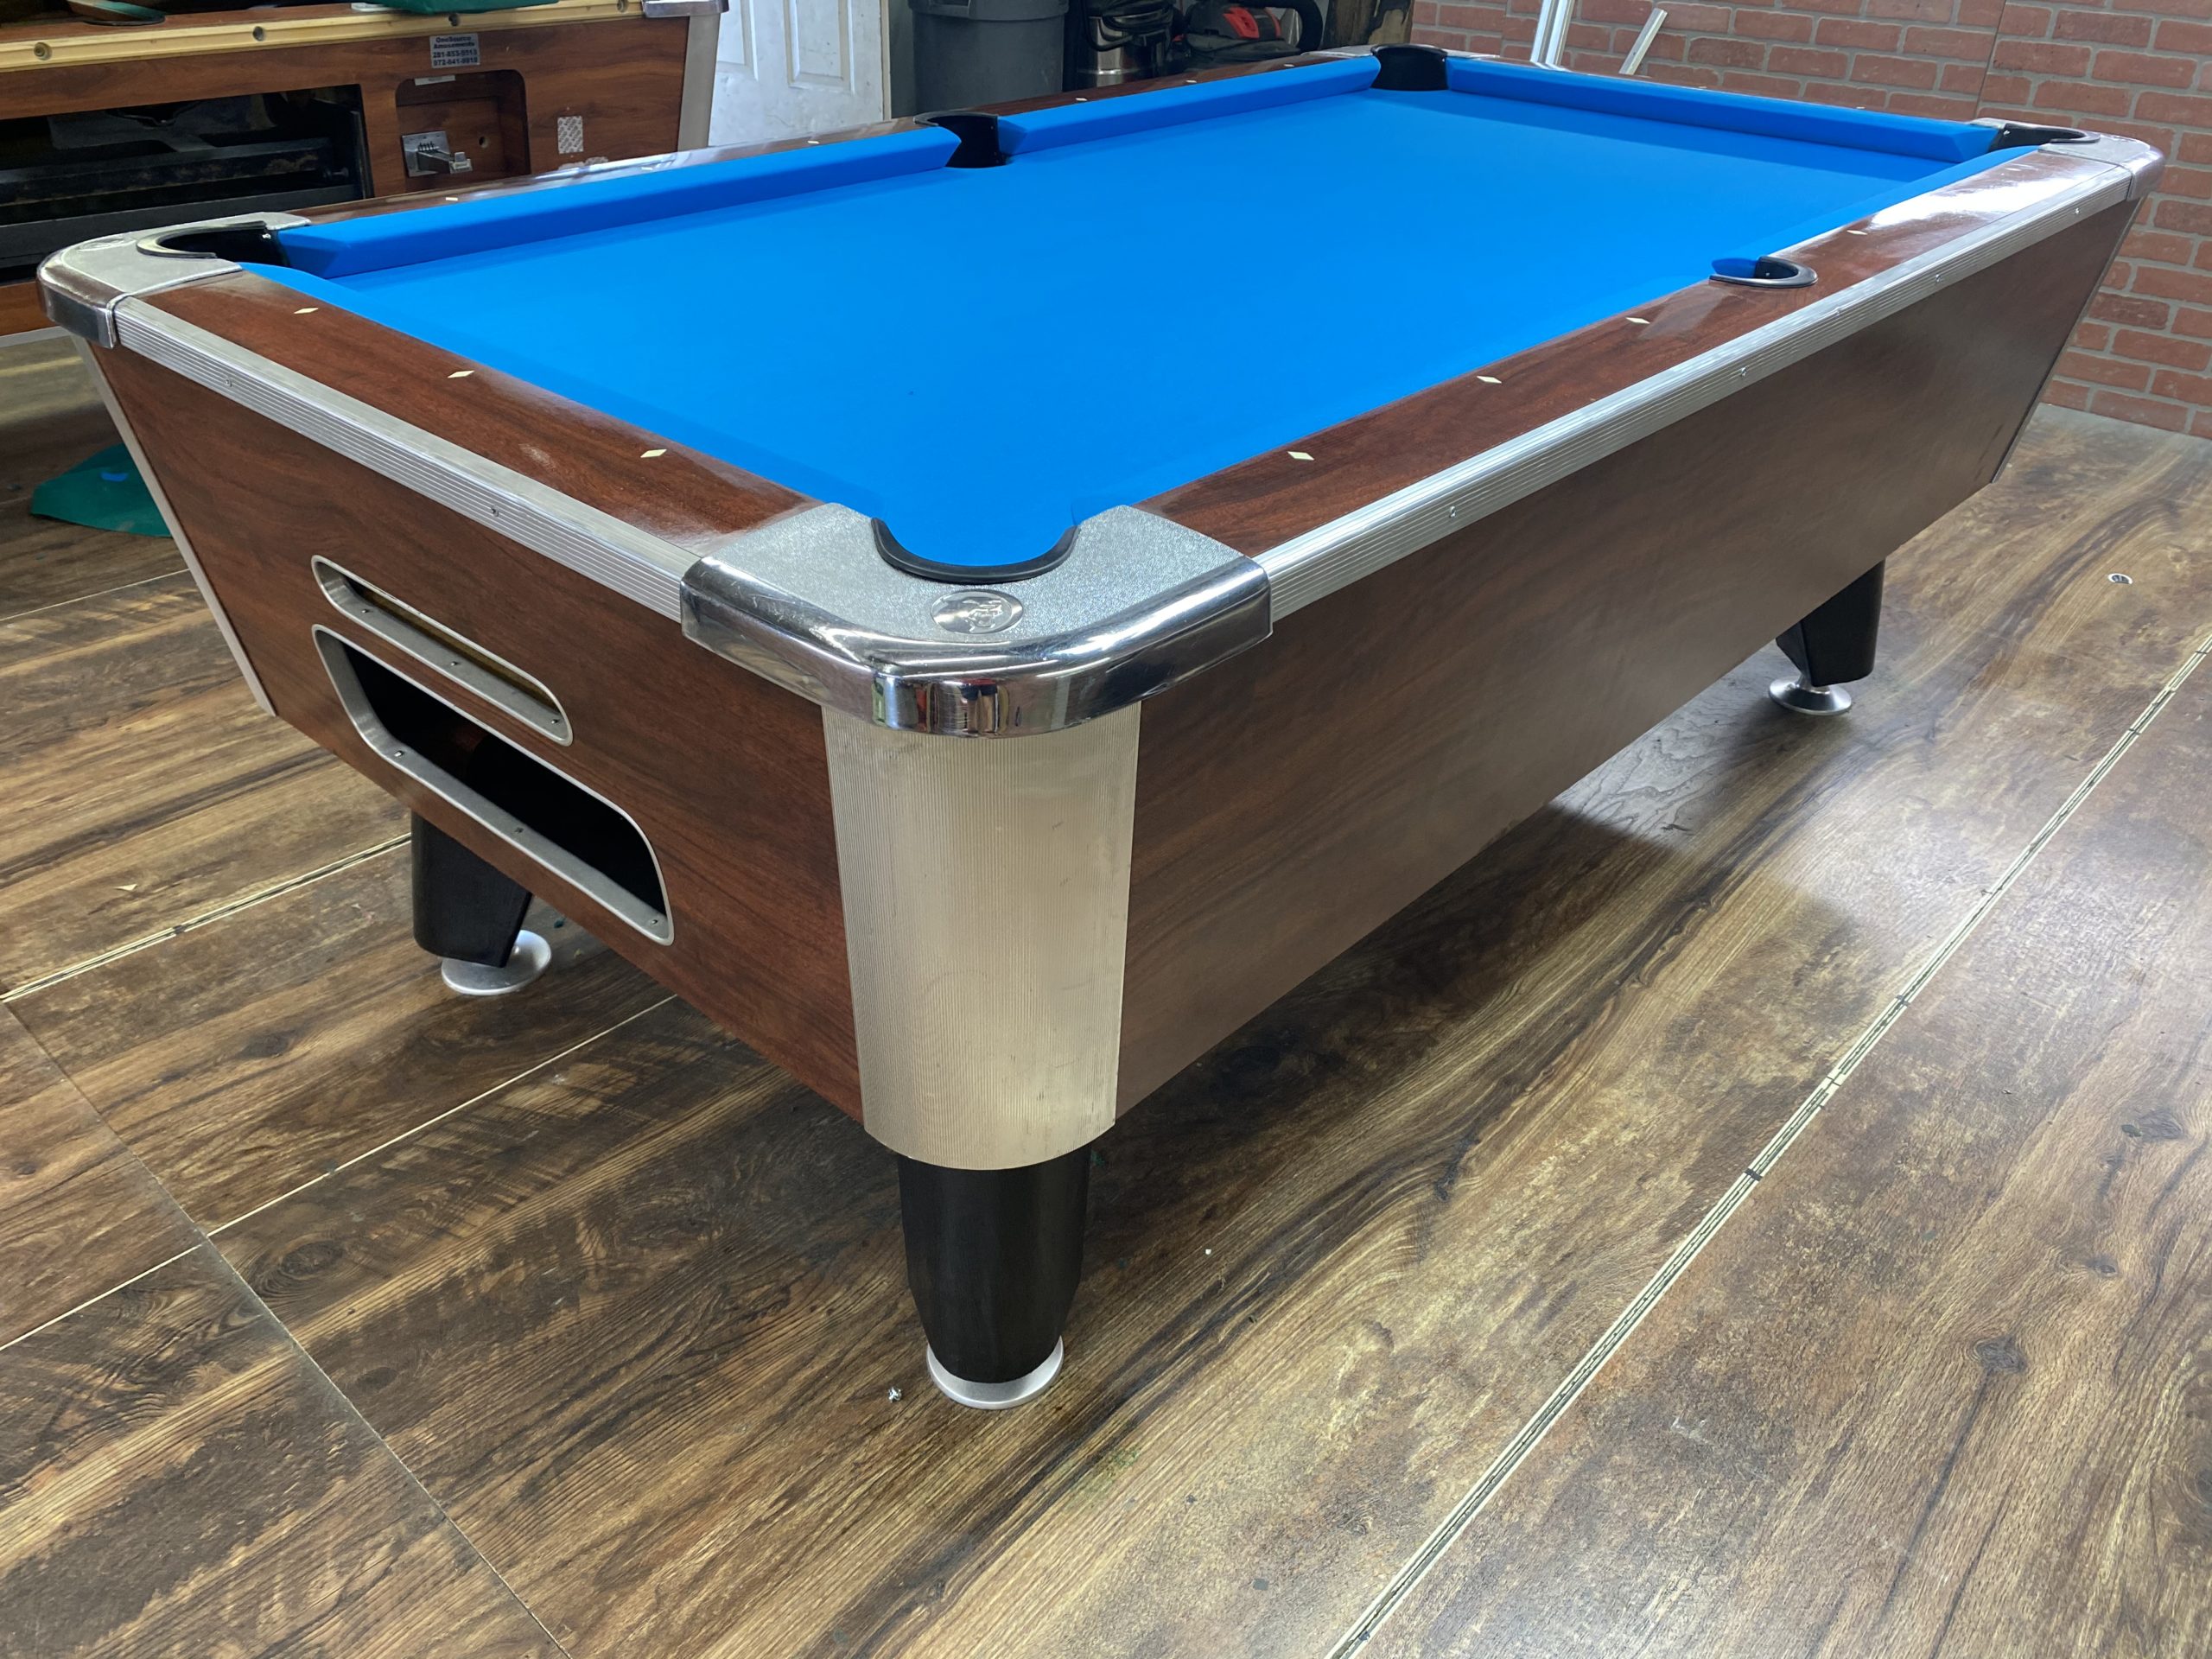 bar billiards table supplies